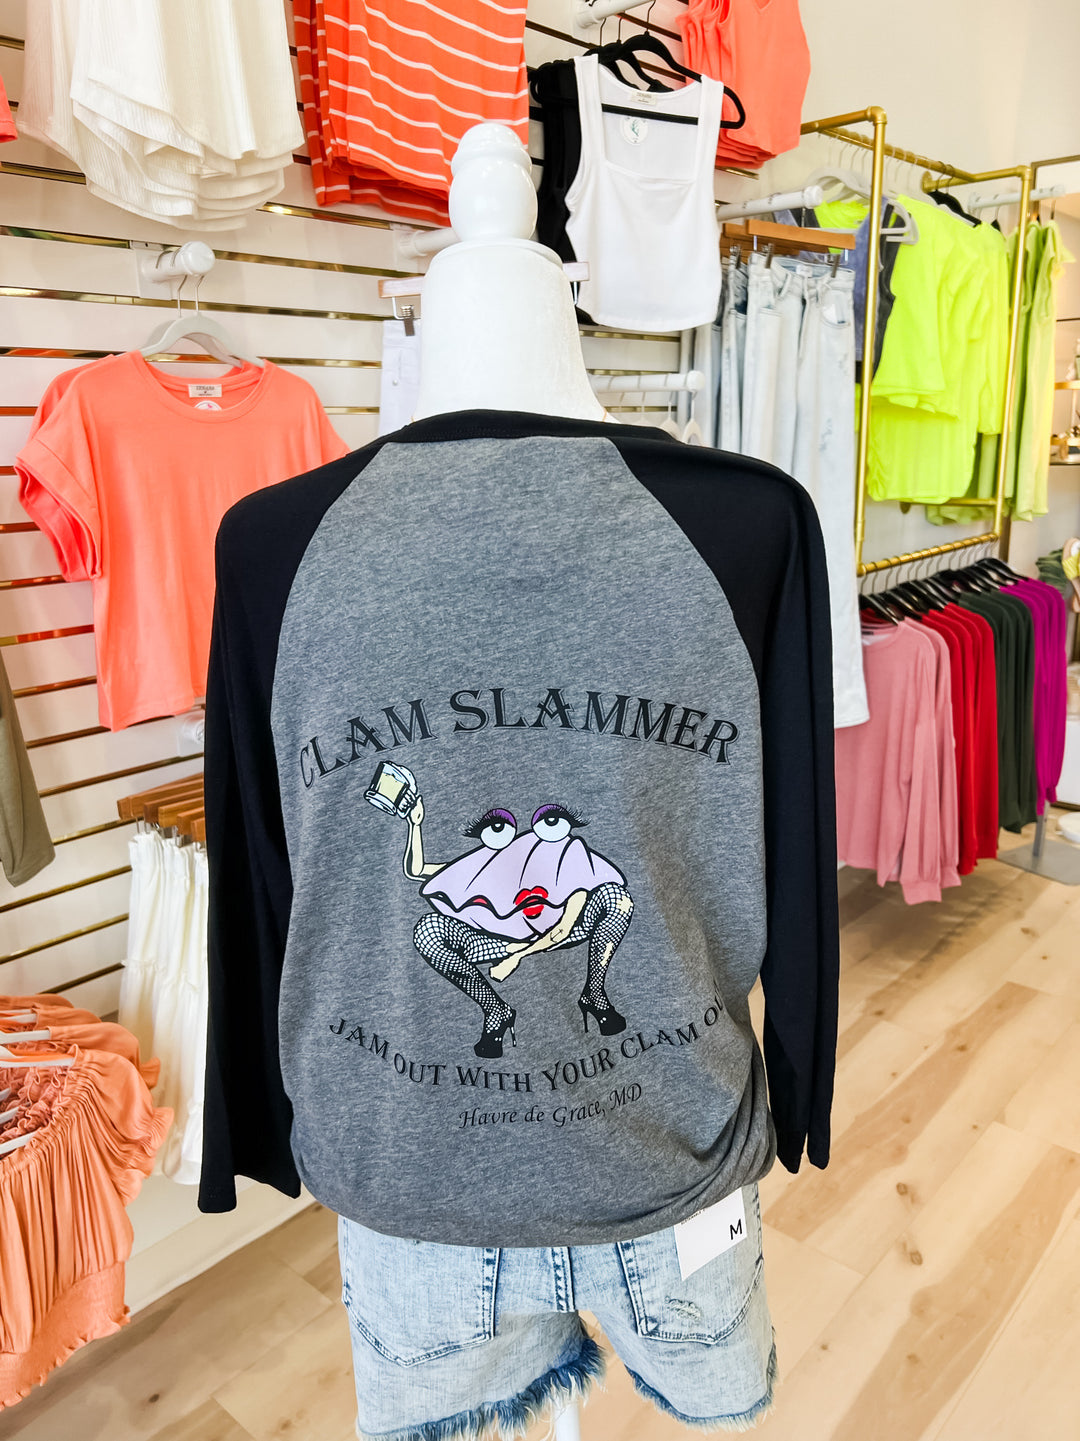 Clam Slammer Baseball Tee - The Teal Antler Boutique